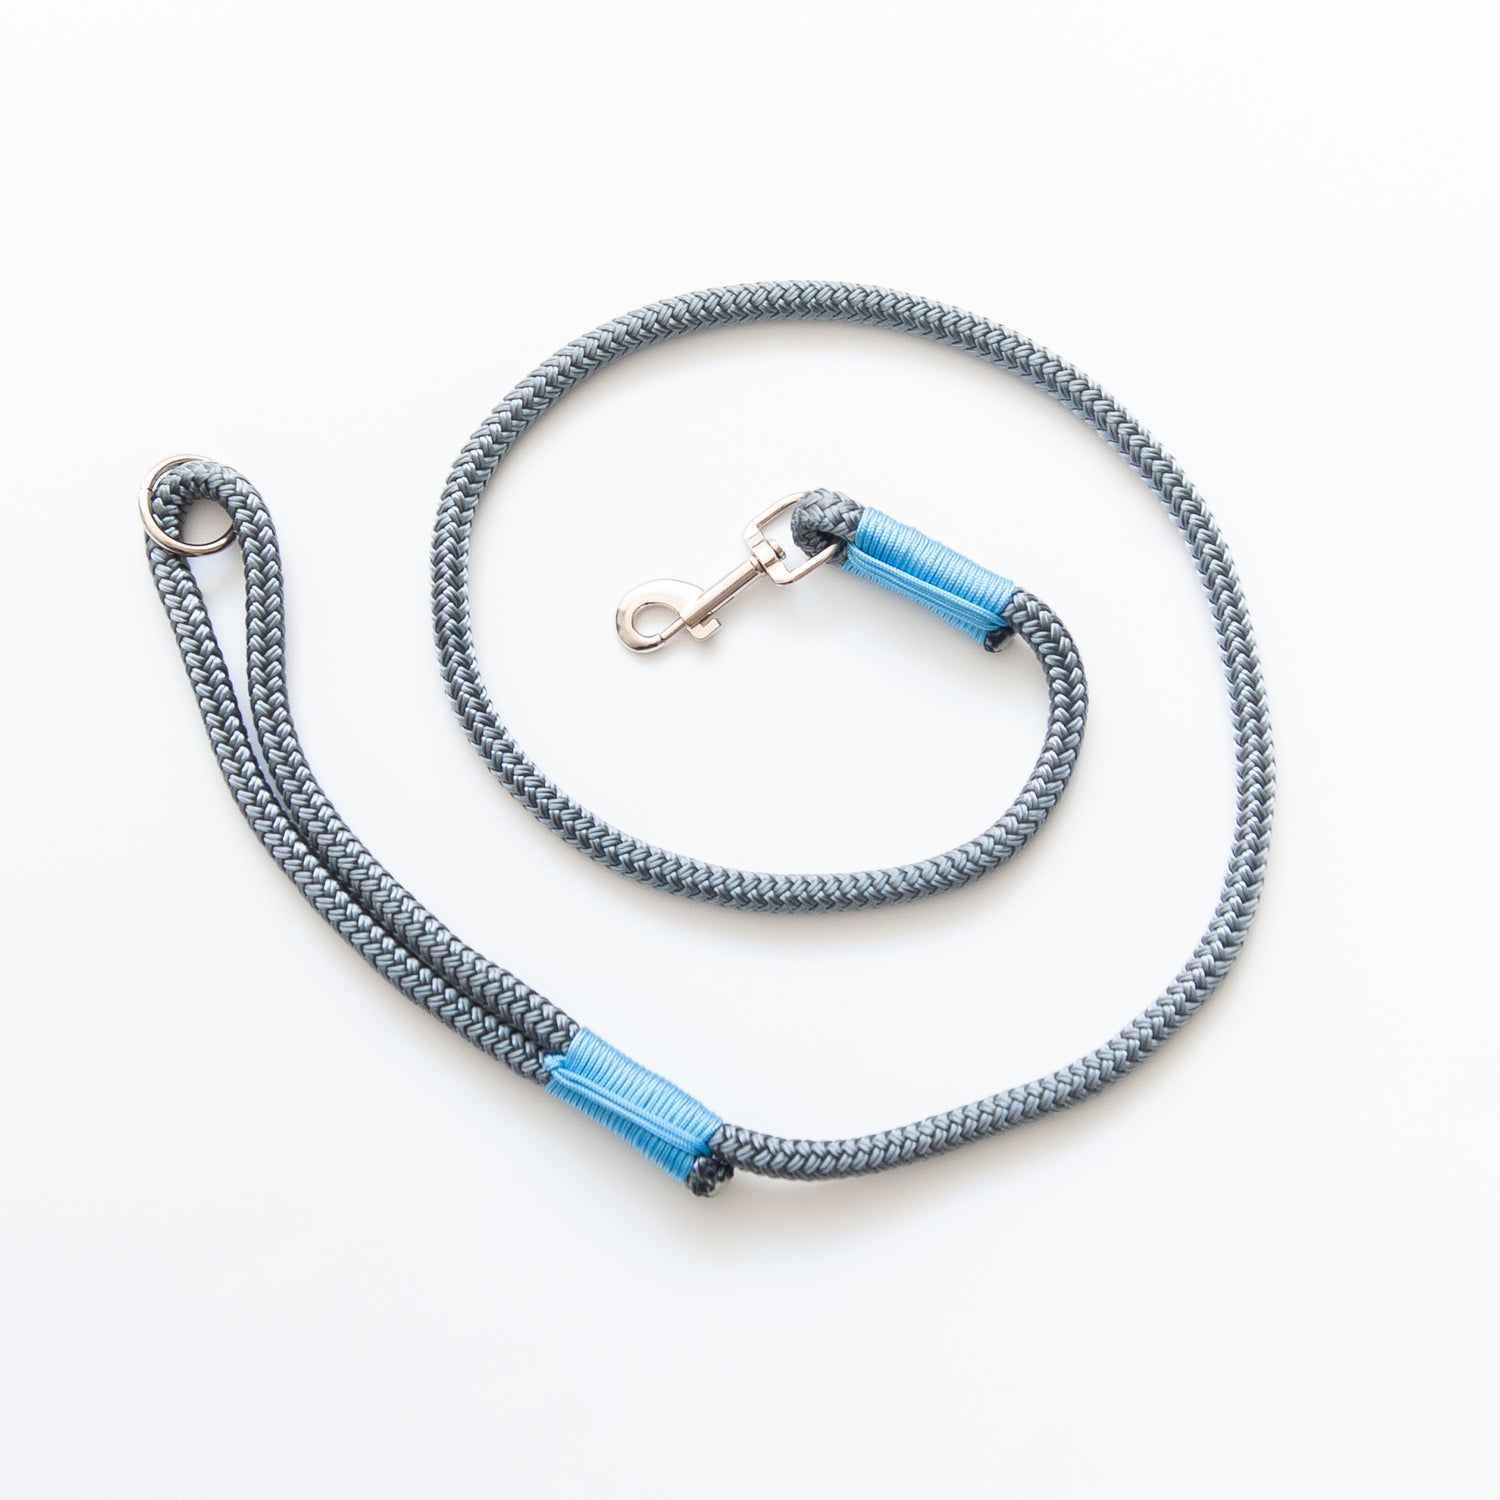 Silver & Baby Blue Marine Rope Dog Leash